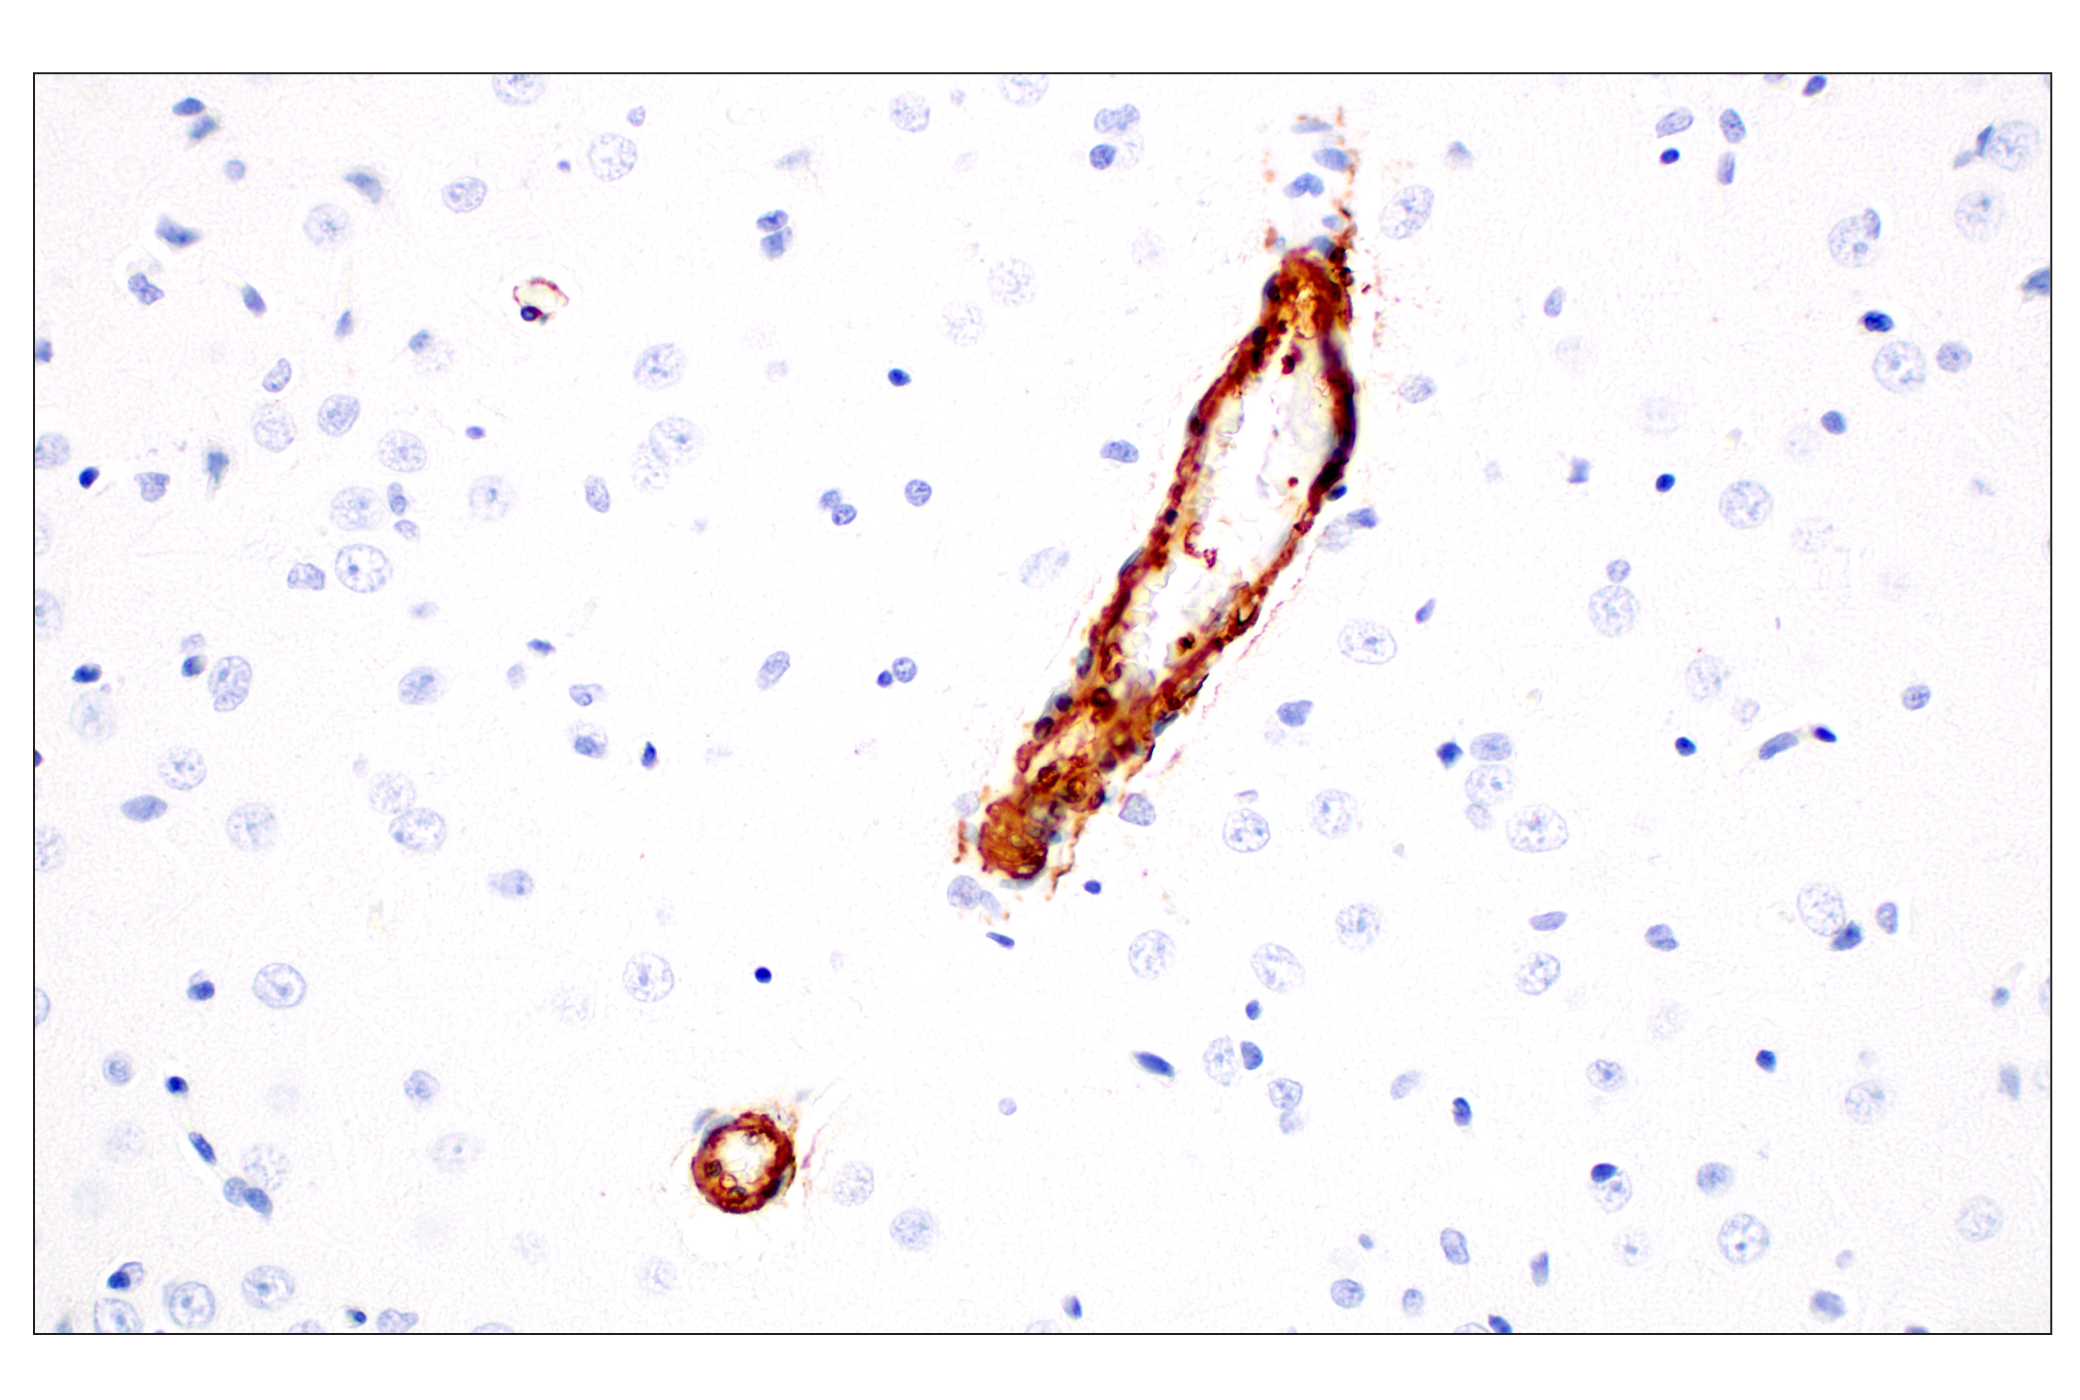  Image 54: Cancer Associated Fibroblast Marker Antibody Sampler Kit